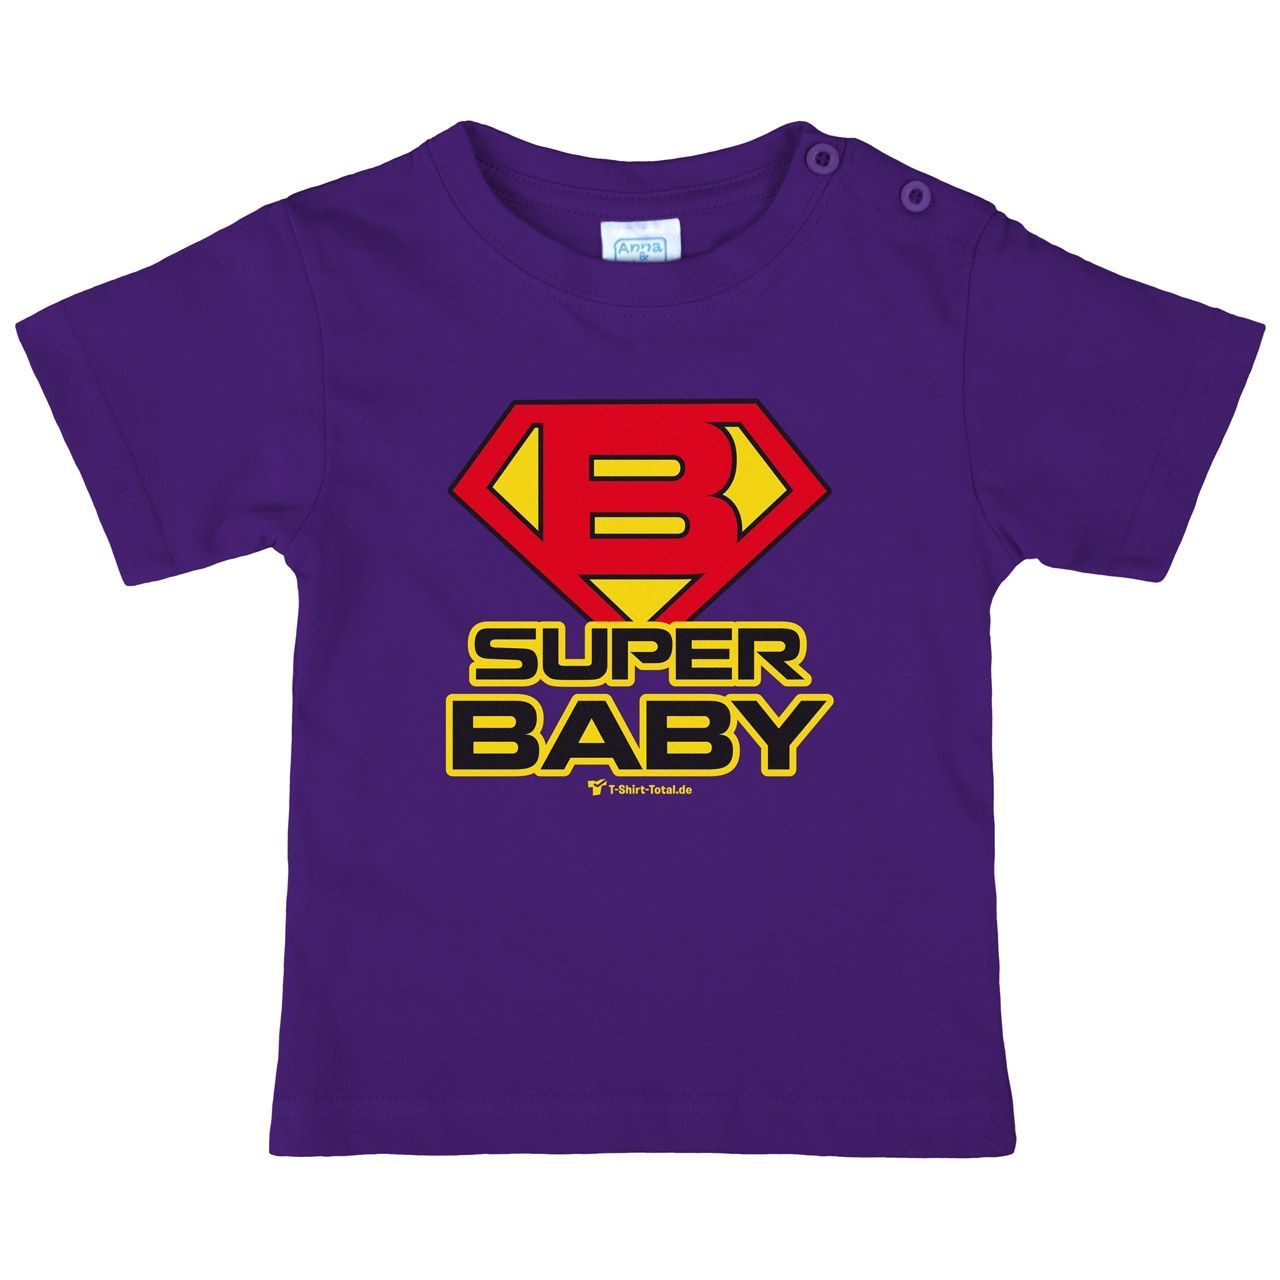 Super Baby Kinder T-Shirt lila 92